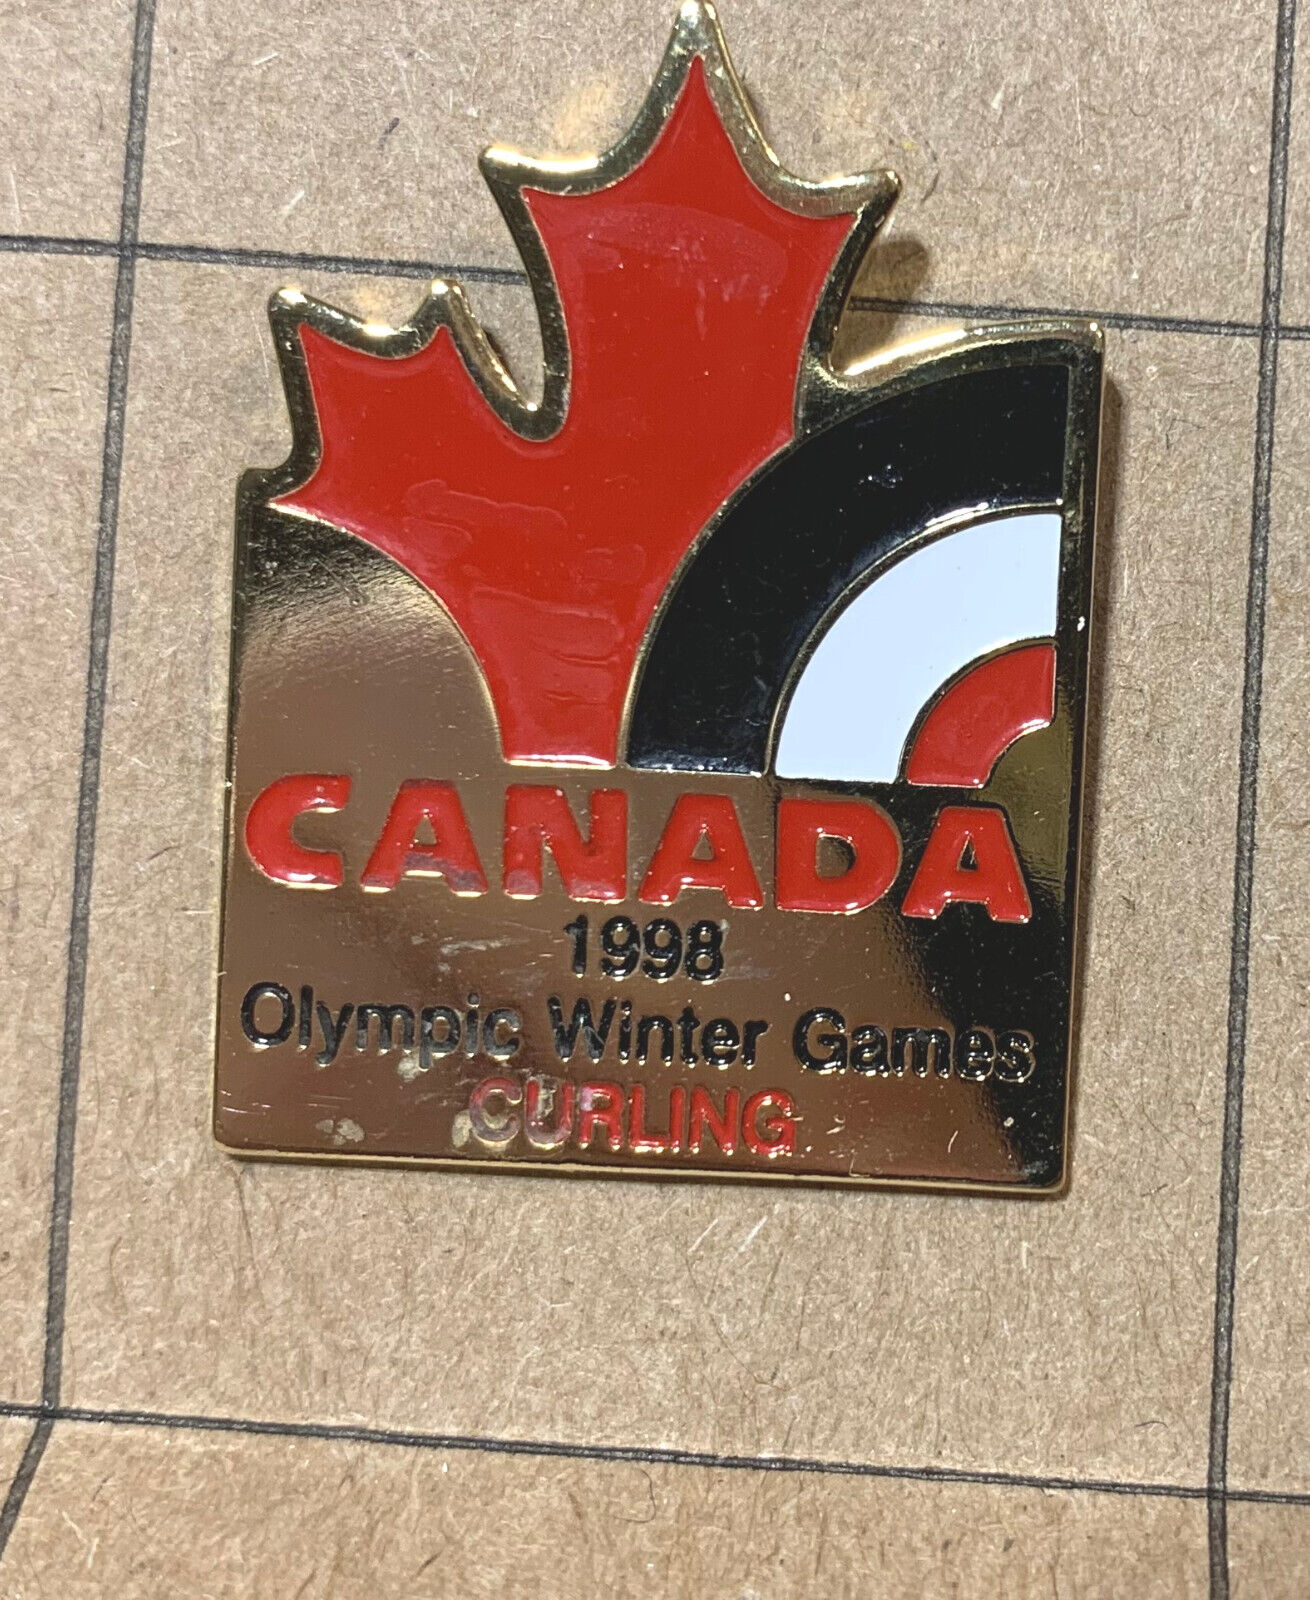 Canada 1998 Olympic Winter Games Curling Souvenir Pin SP#8